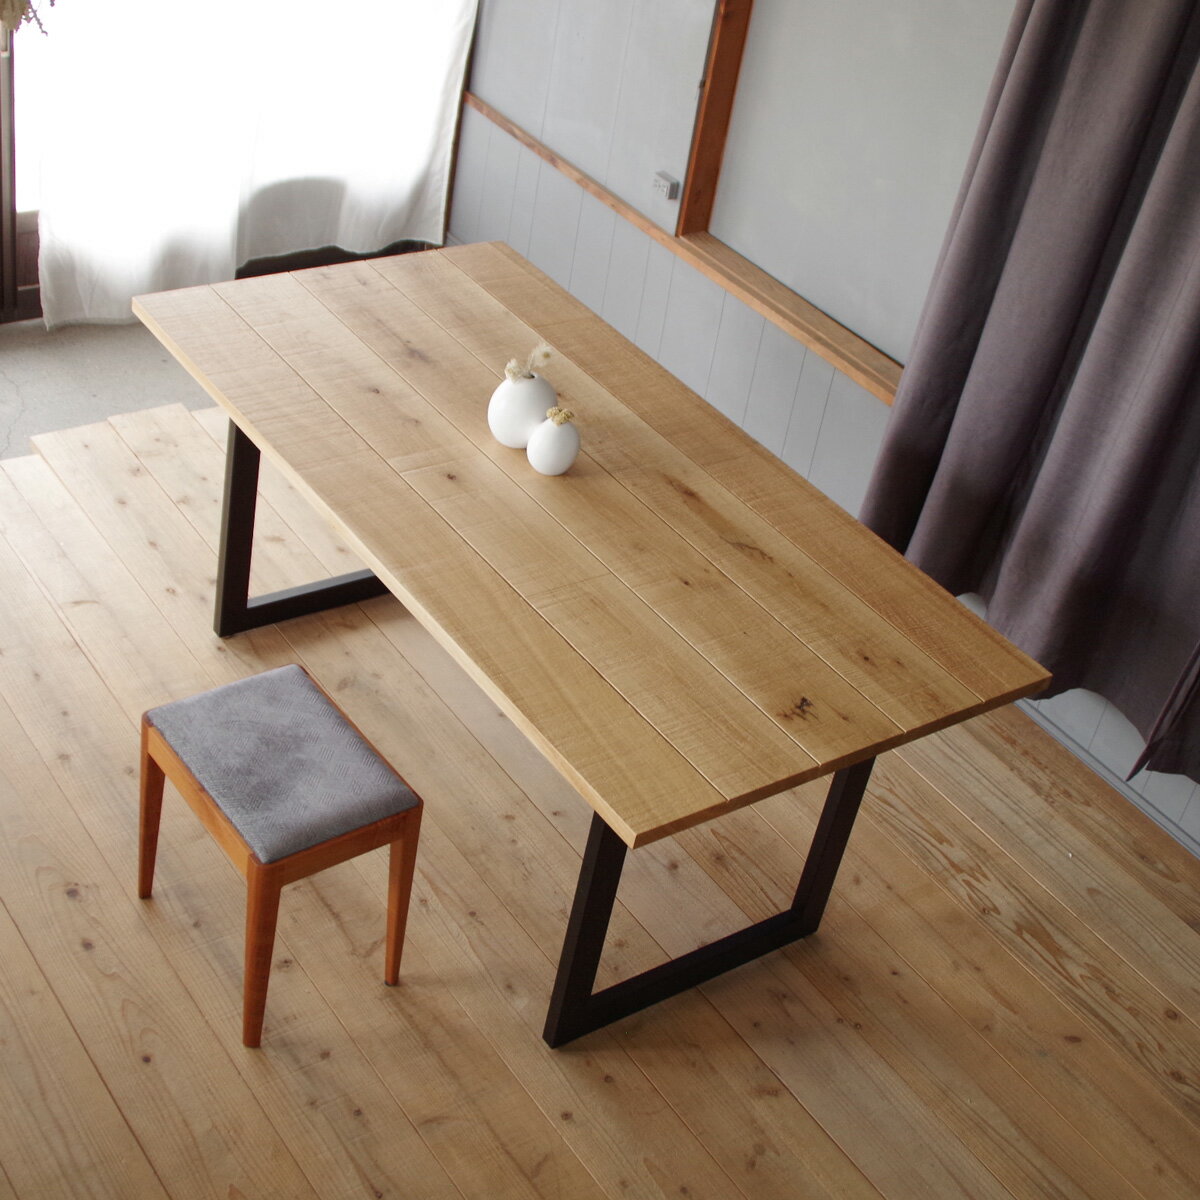 DT-Origin - naraダイニングテーブル 160×85 長方形 ナラ節入無垢材 アイアン脚|北欧|和風|モダン|シンプル|デザイン||日本製|リビングテーブル|国産リビングテーブル||センターテーブル|ローテーブル|座卓|DIY|アイアン|男前|